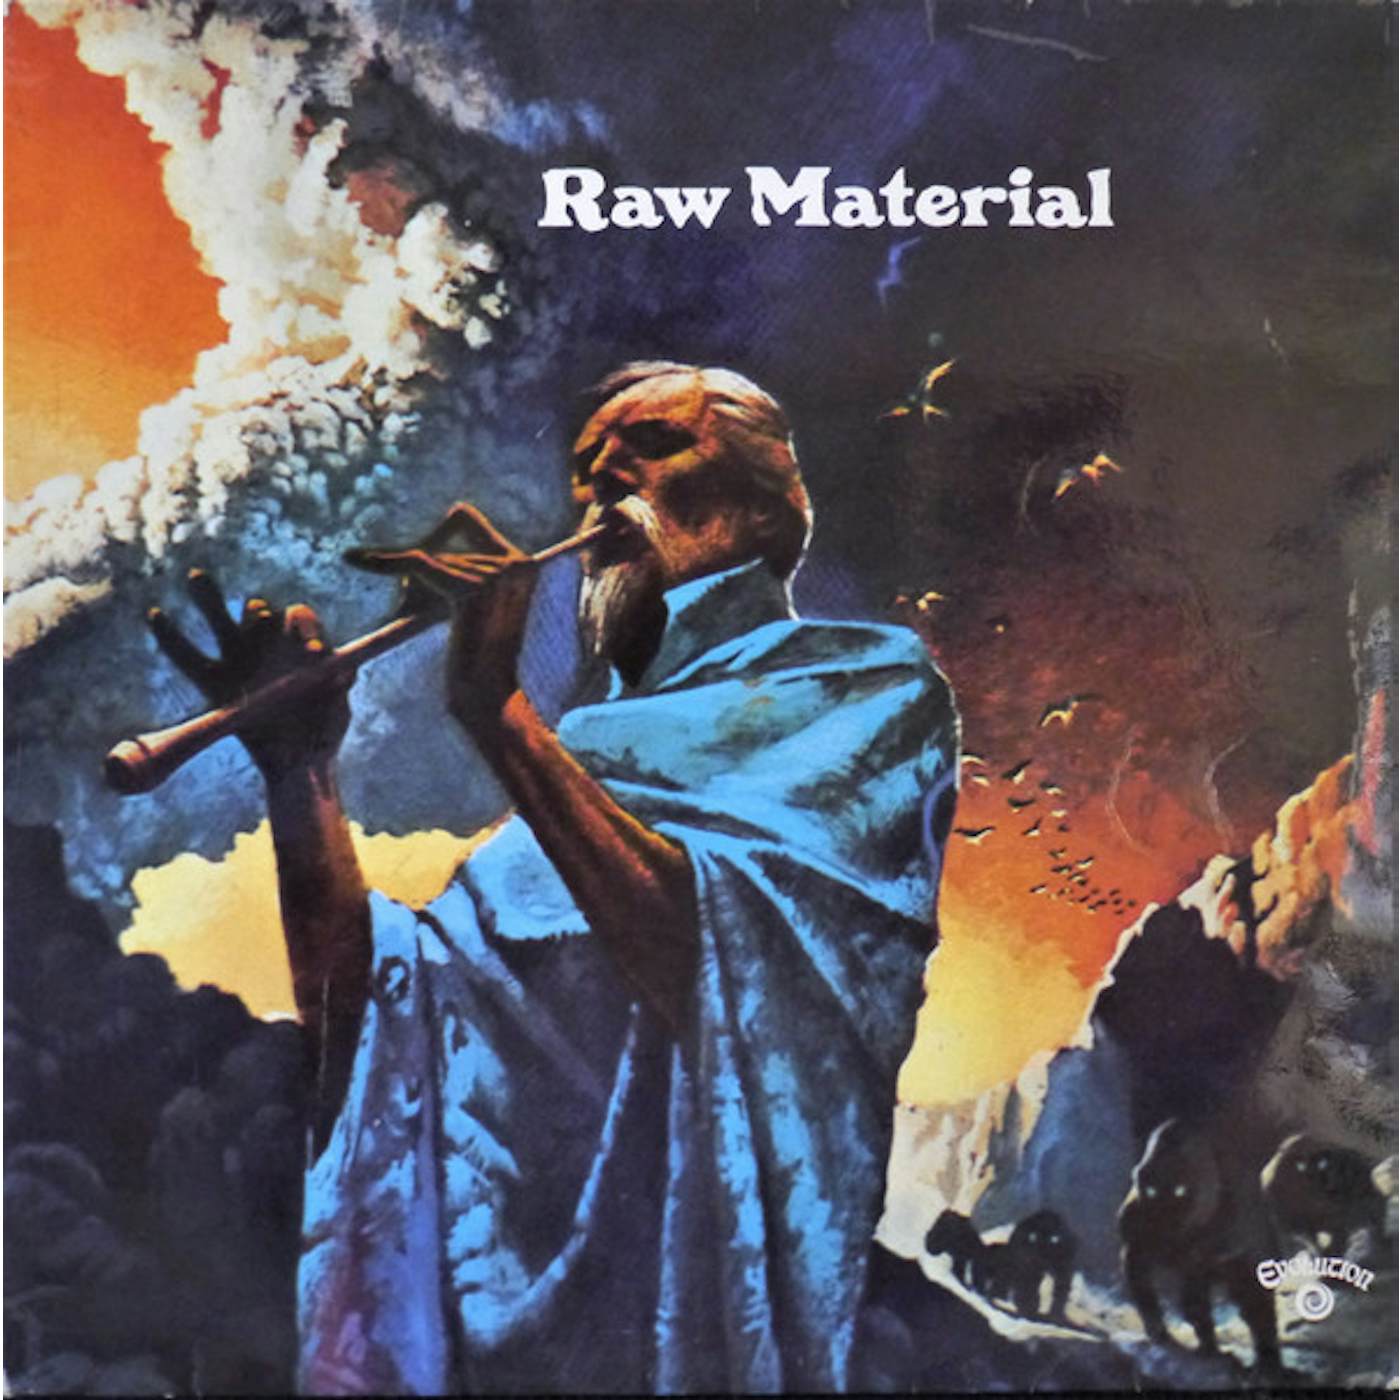 Raw Material Vinyl Record